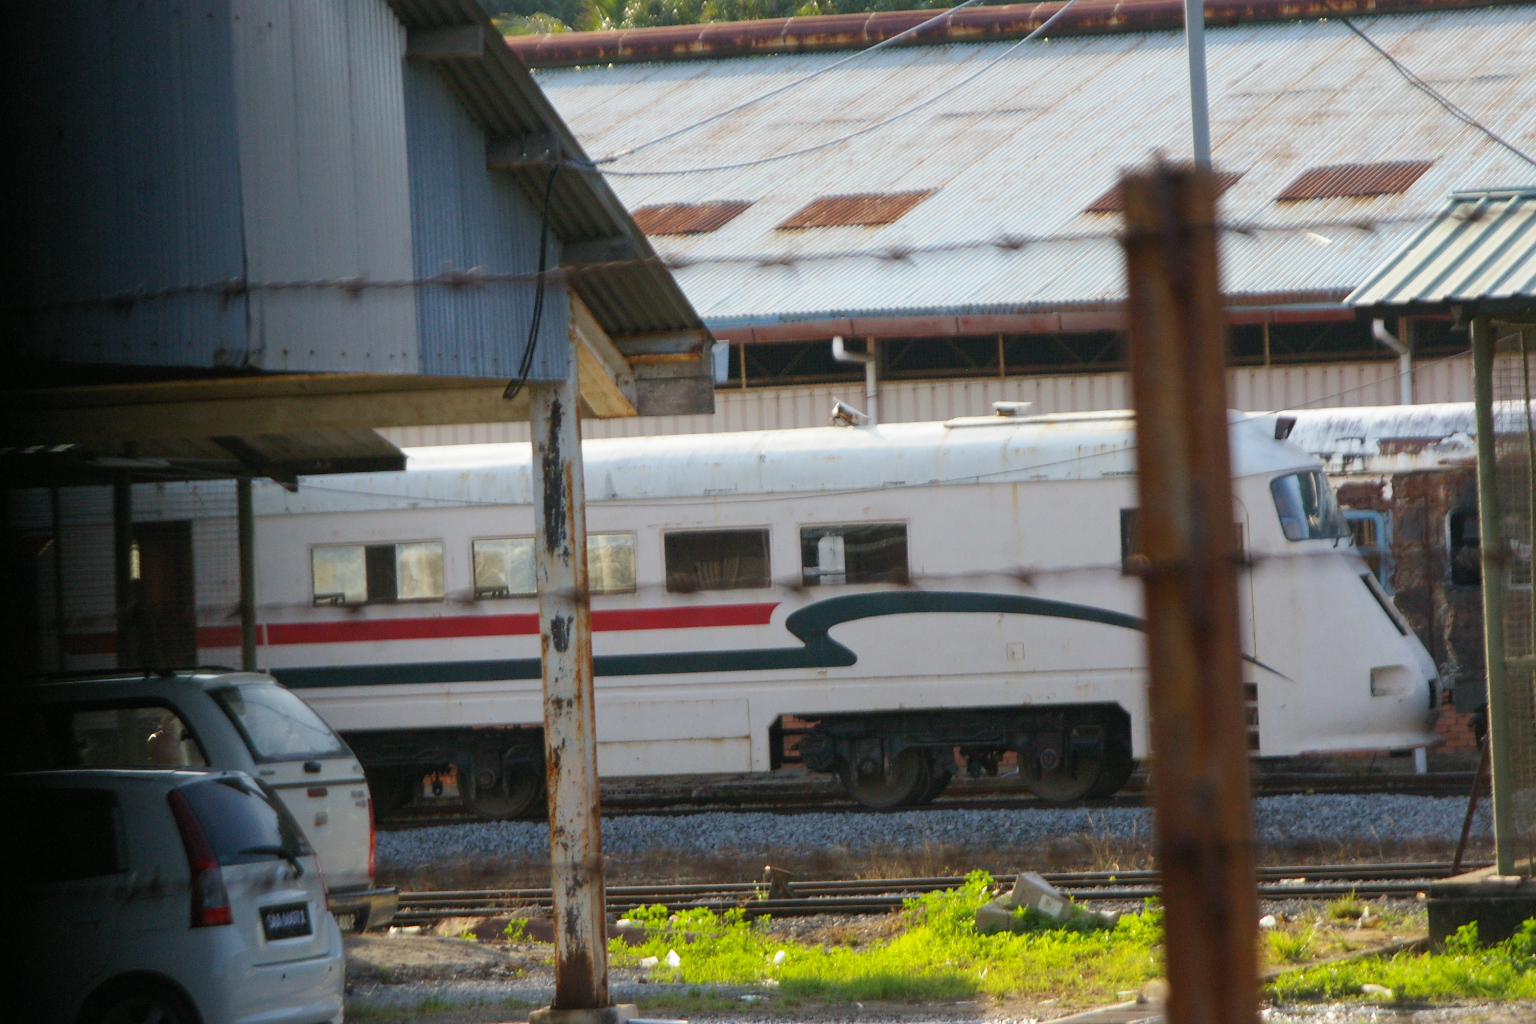 Sabah State Railway ? in Tanjung Aru Station, Kota Kinabalu, Malaysia April 30,2014